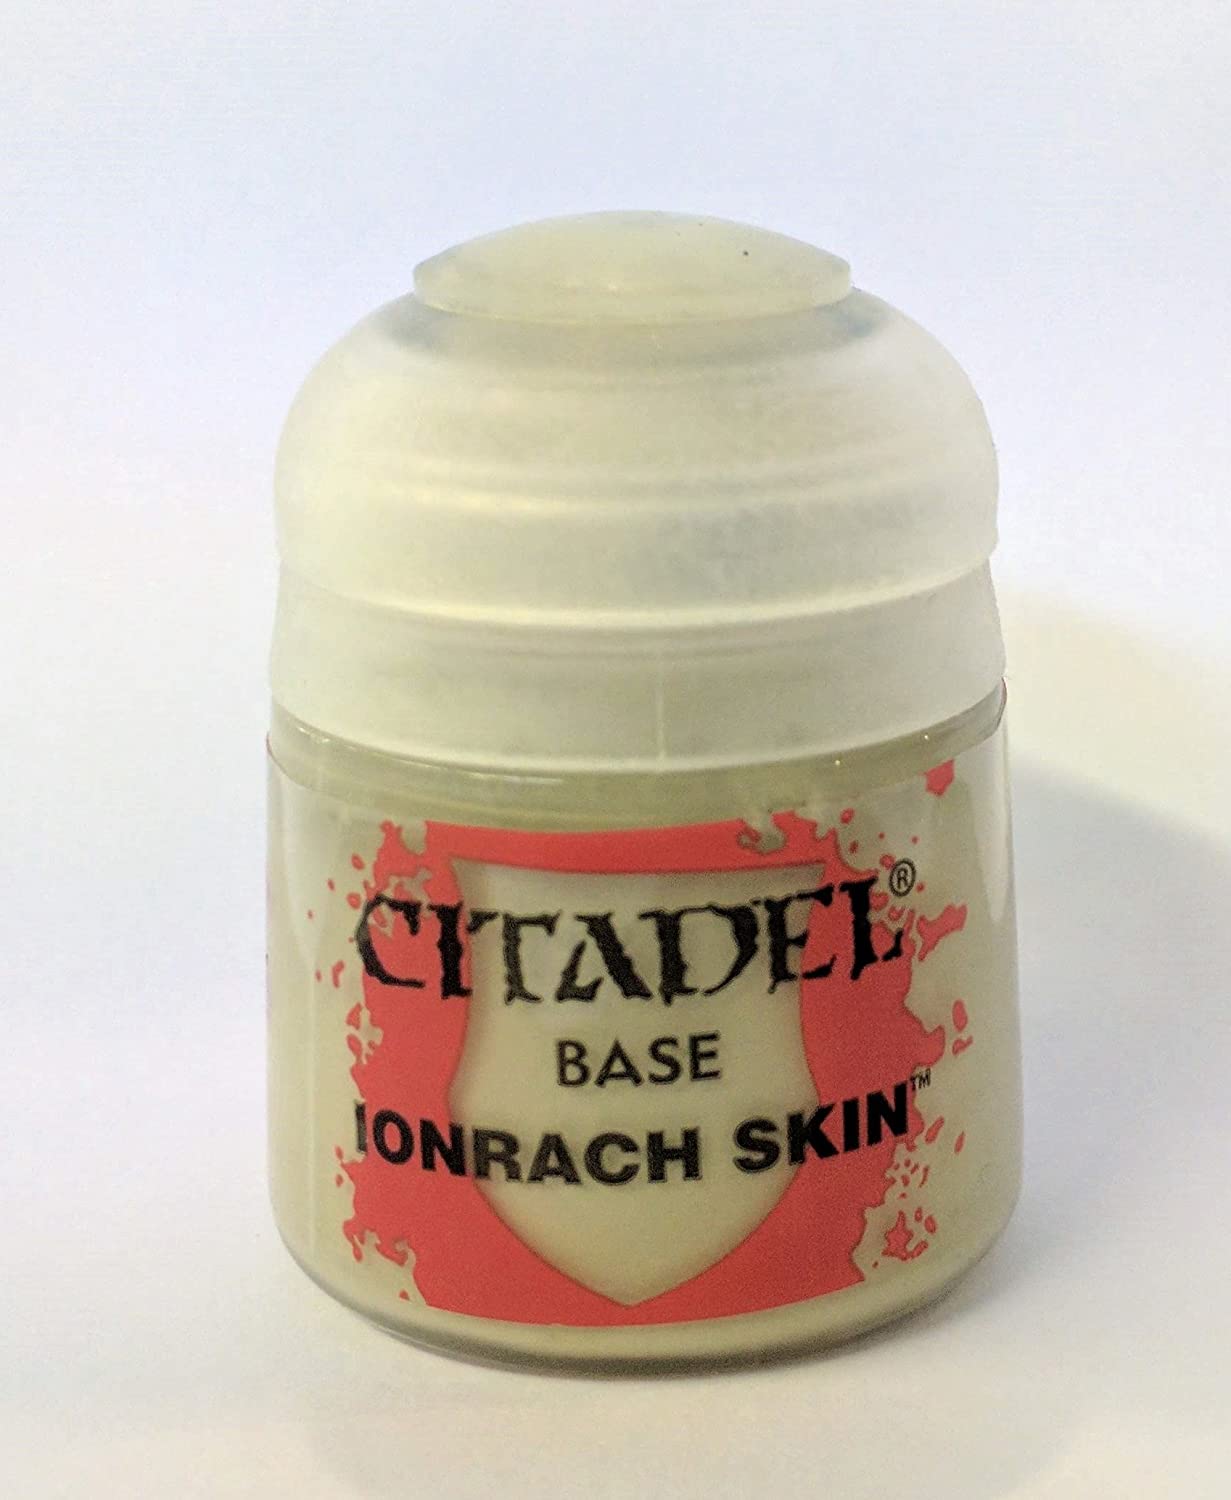 Base Ionrach Skin